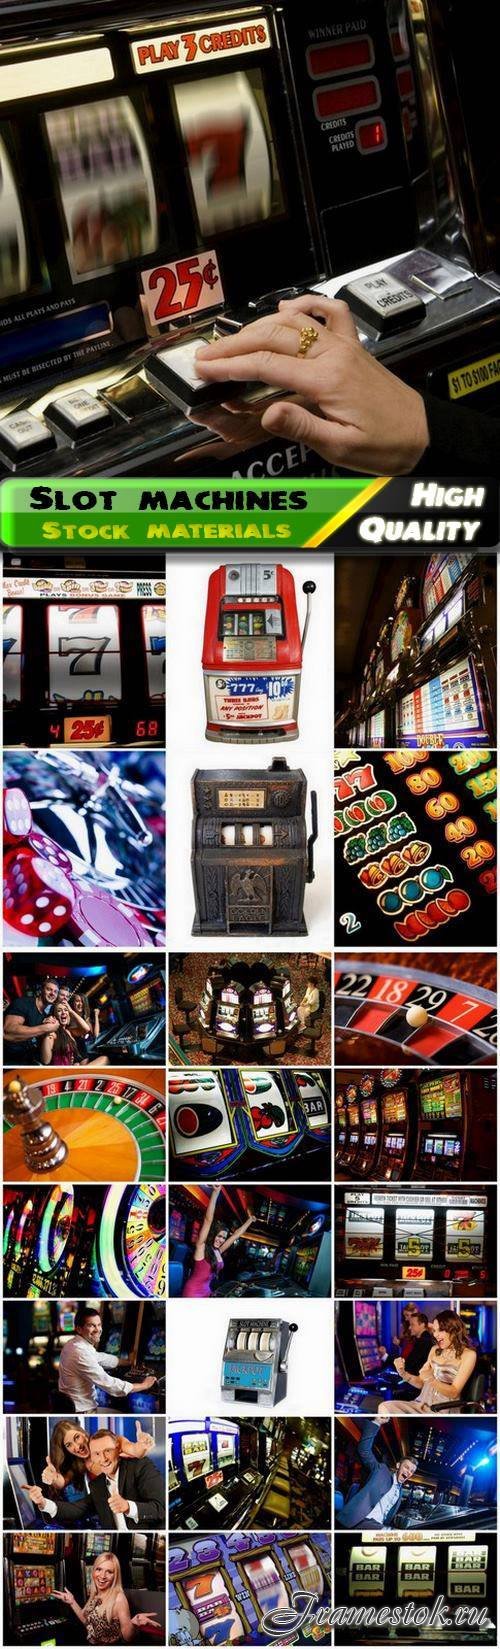 Slot machines in casino and gambling winnings people - 25 HQ Jpg